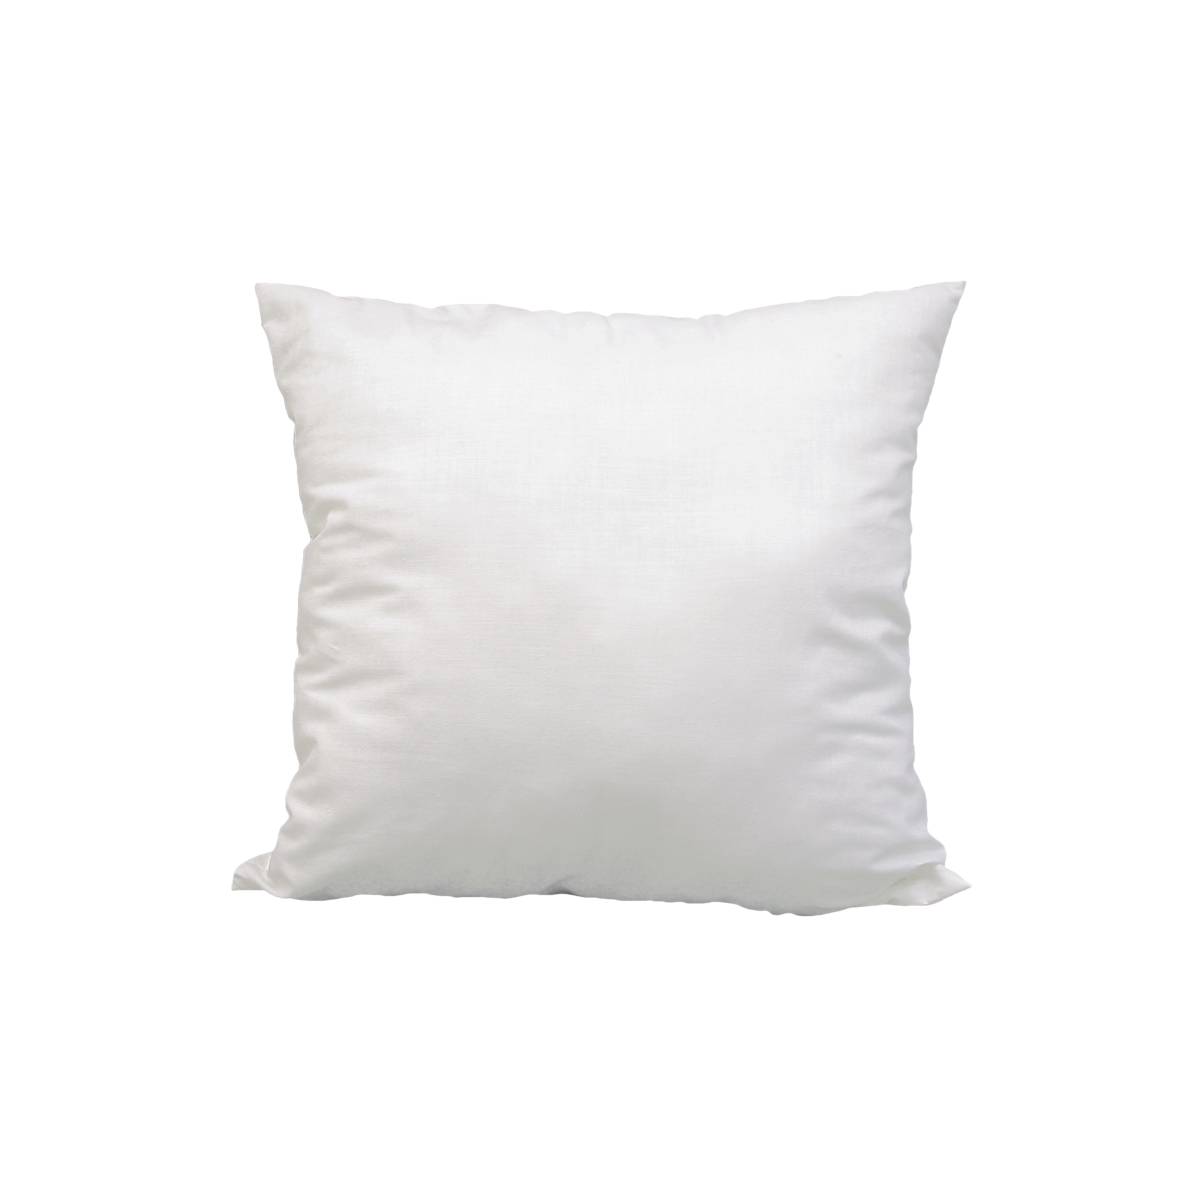 Split P 999-016-SQR 16 x 16 in. Square Pillow Insert